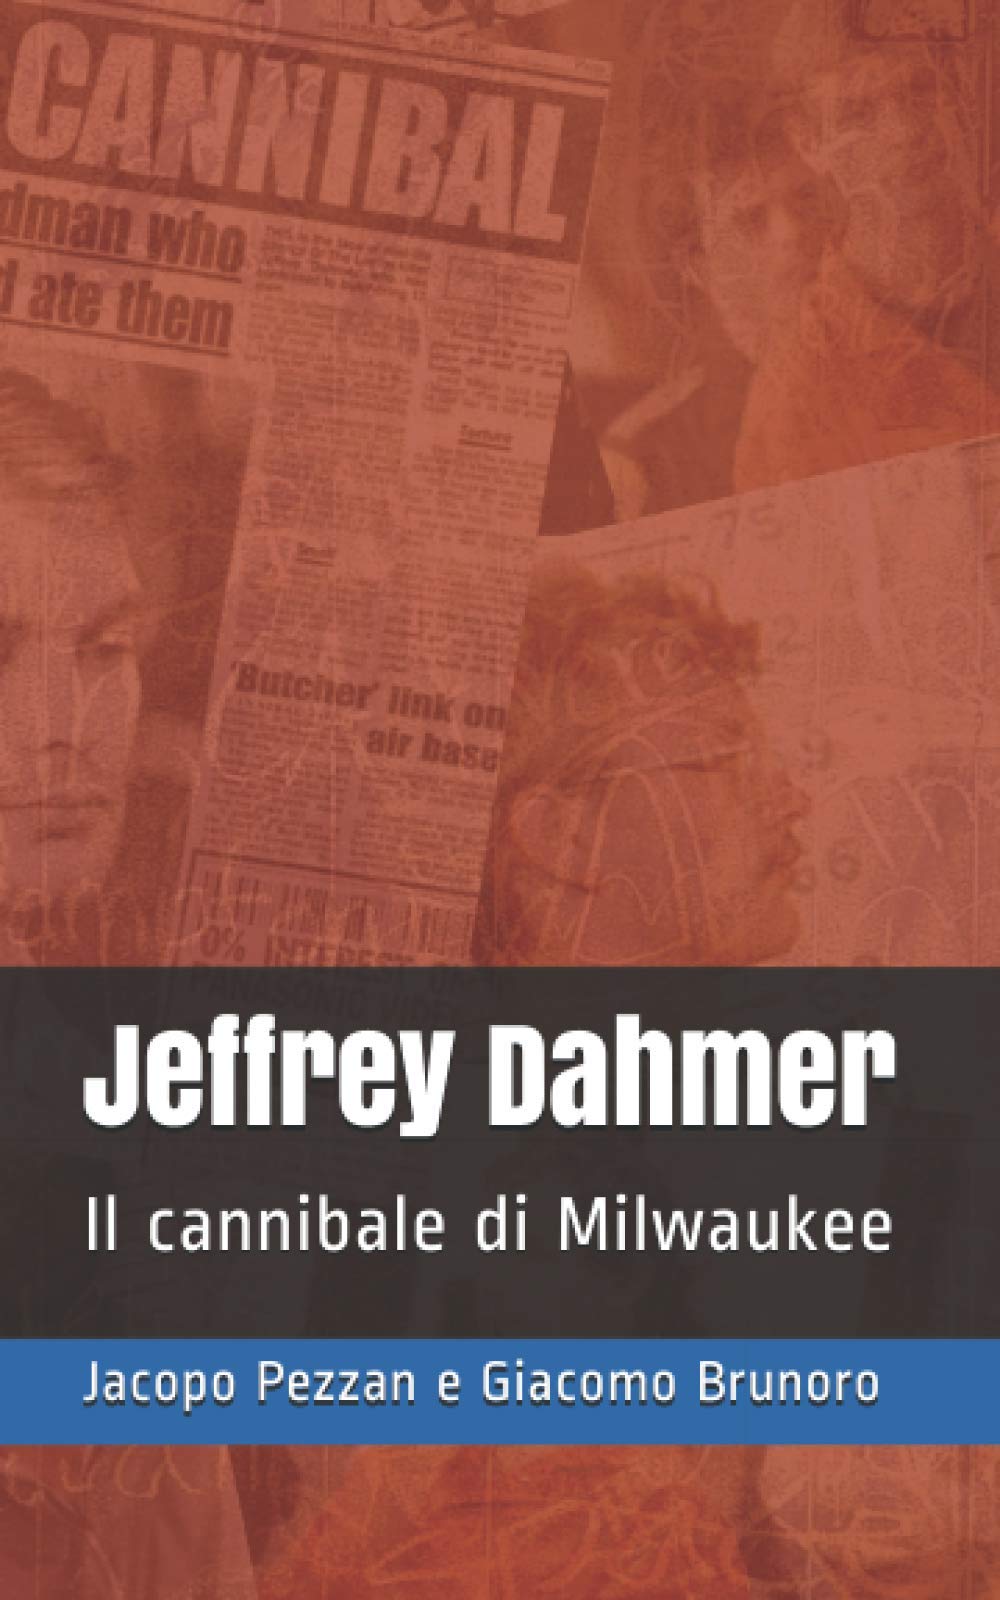 Jeffrey Dahmer: Il cannibale di Milwaukee di Pezzan Jacopo e Brunoro Giacomo